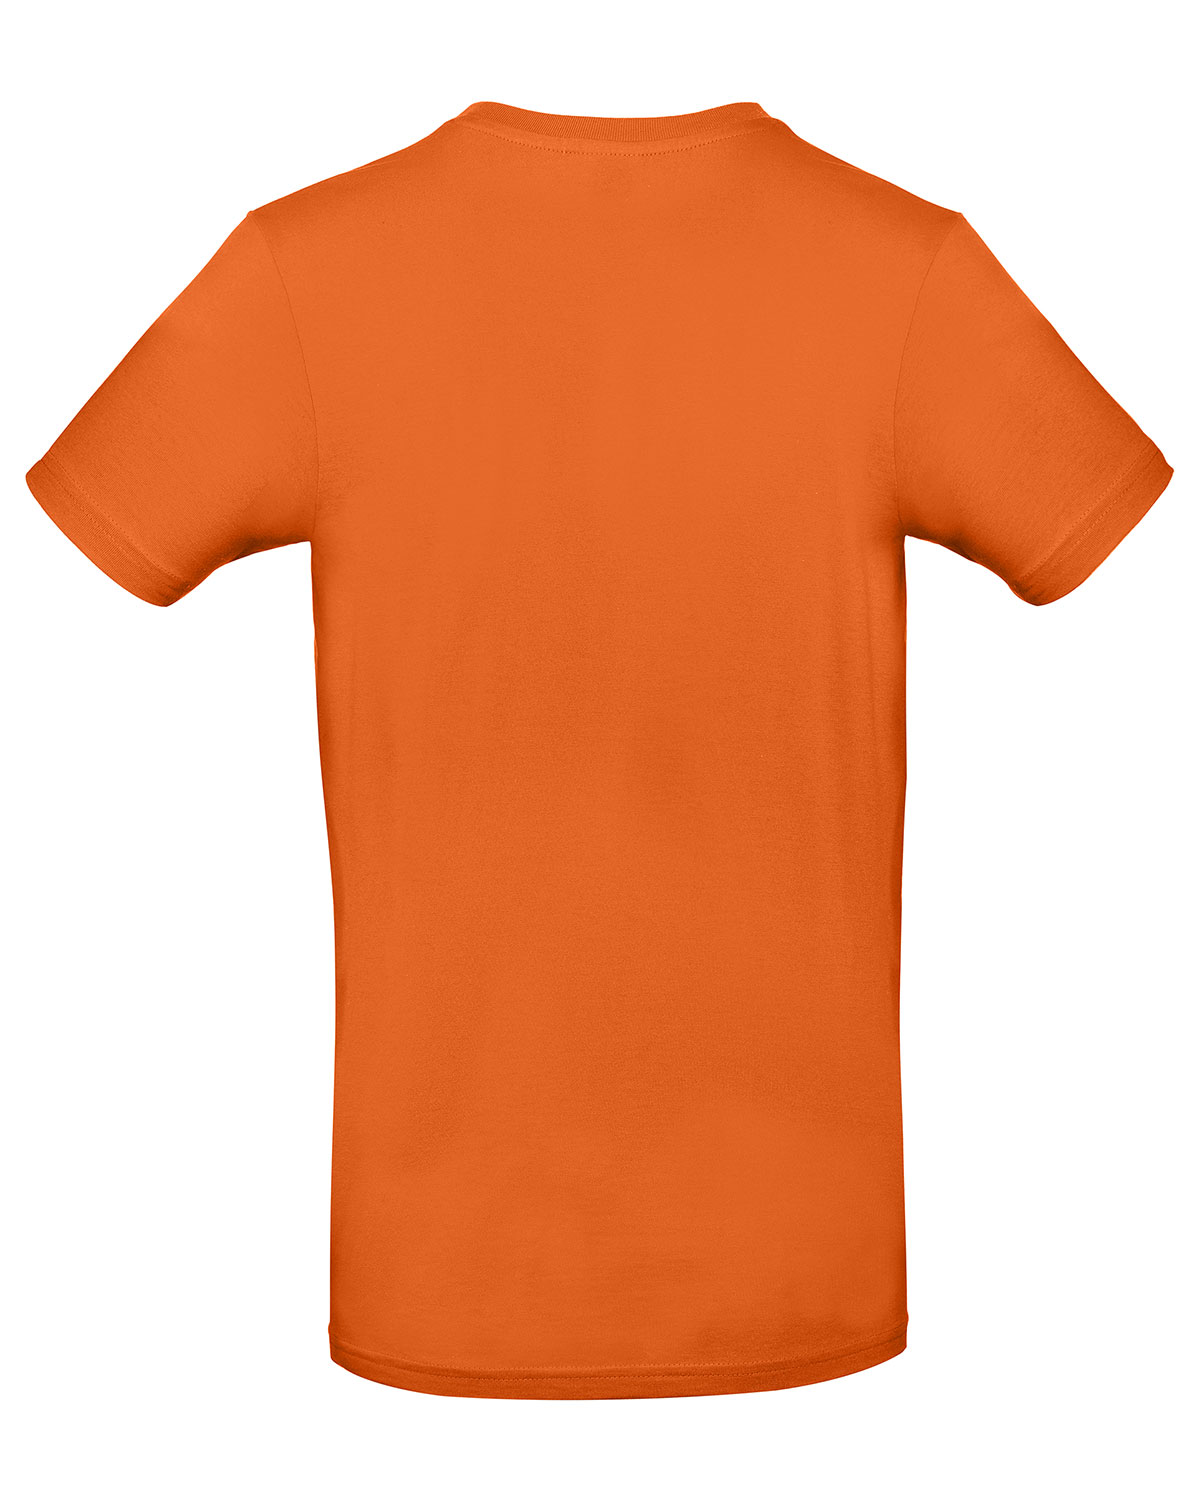 T-Shirt #E190 Urban Orange 3XL